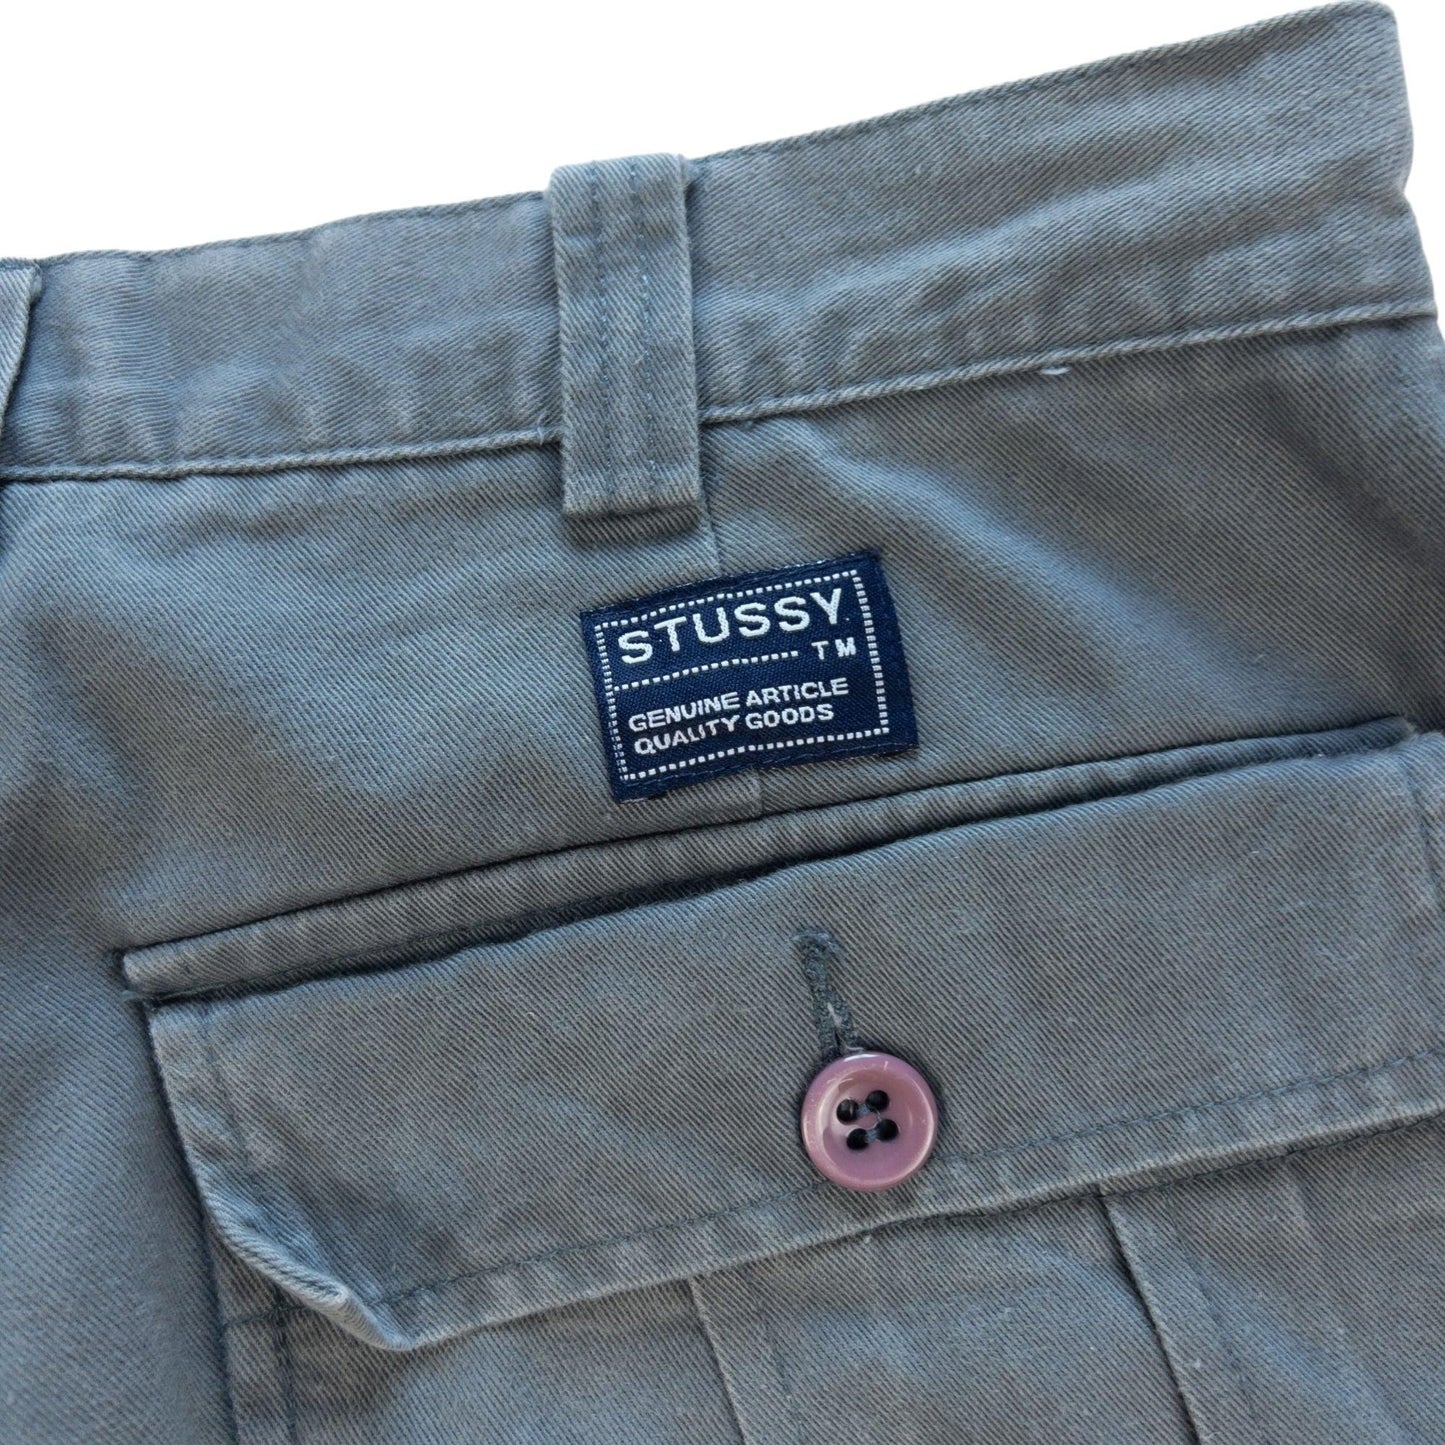 Vintage Stussy Cargo Trousers Size W30